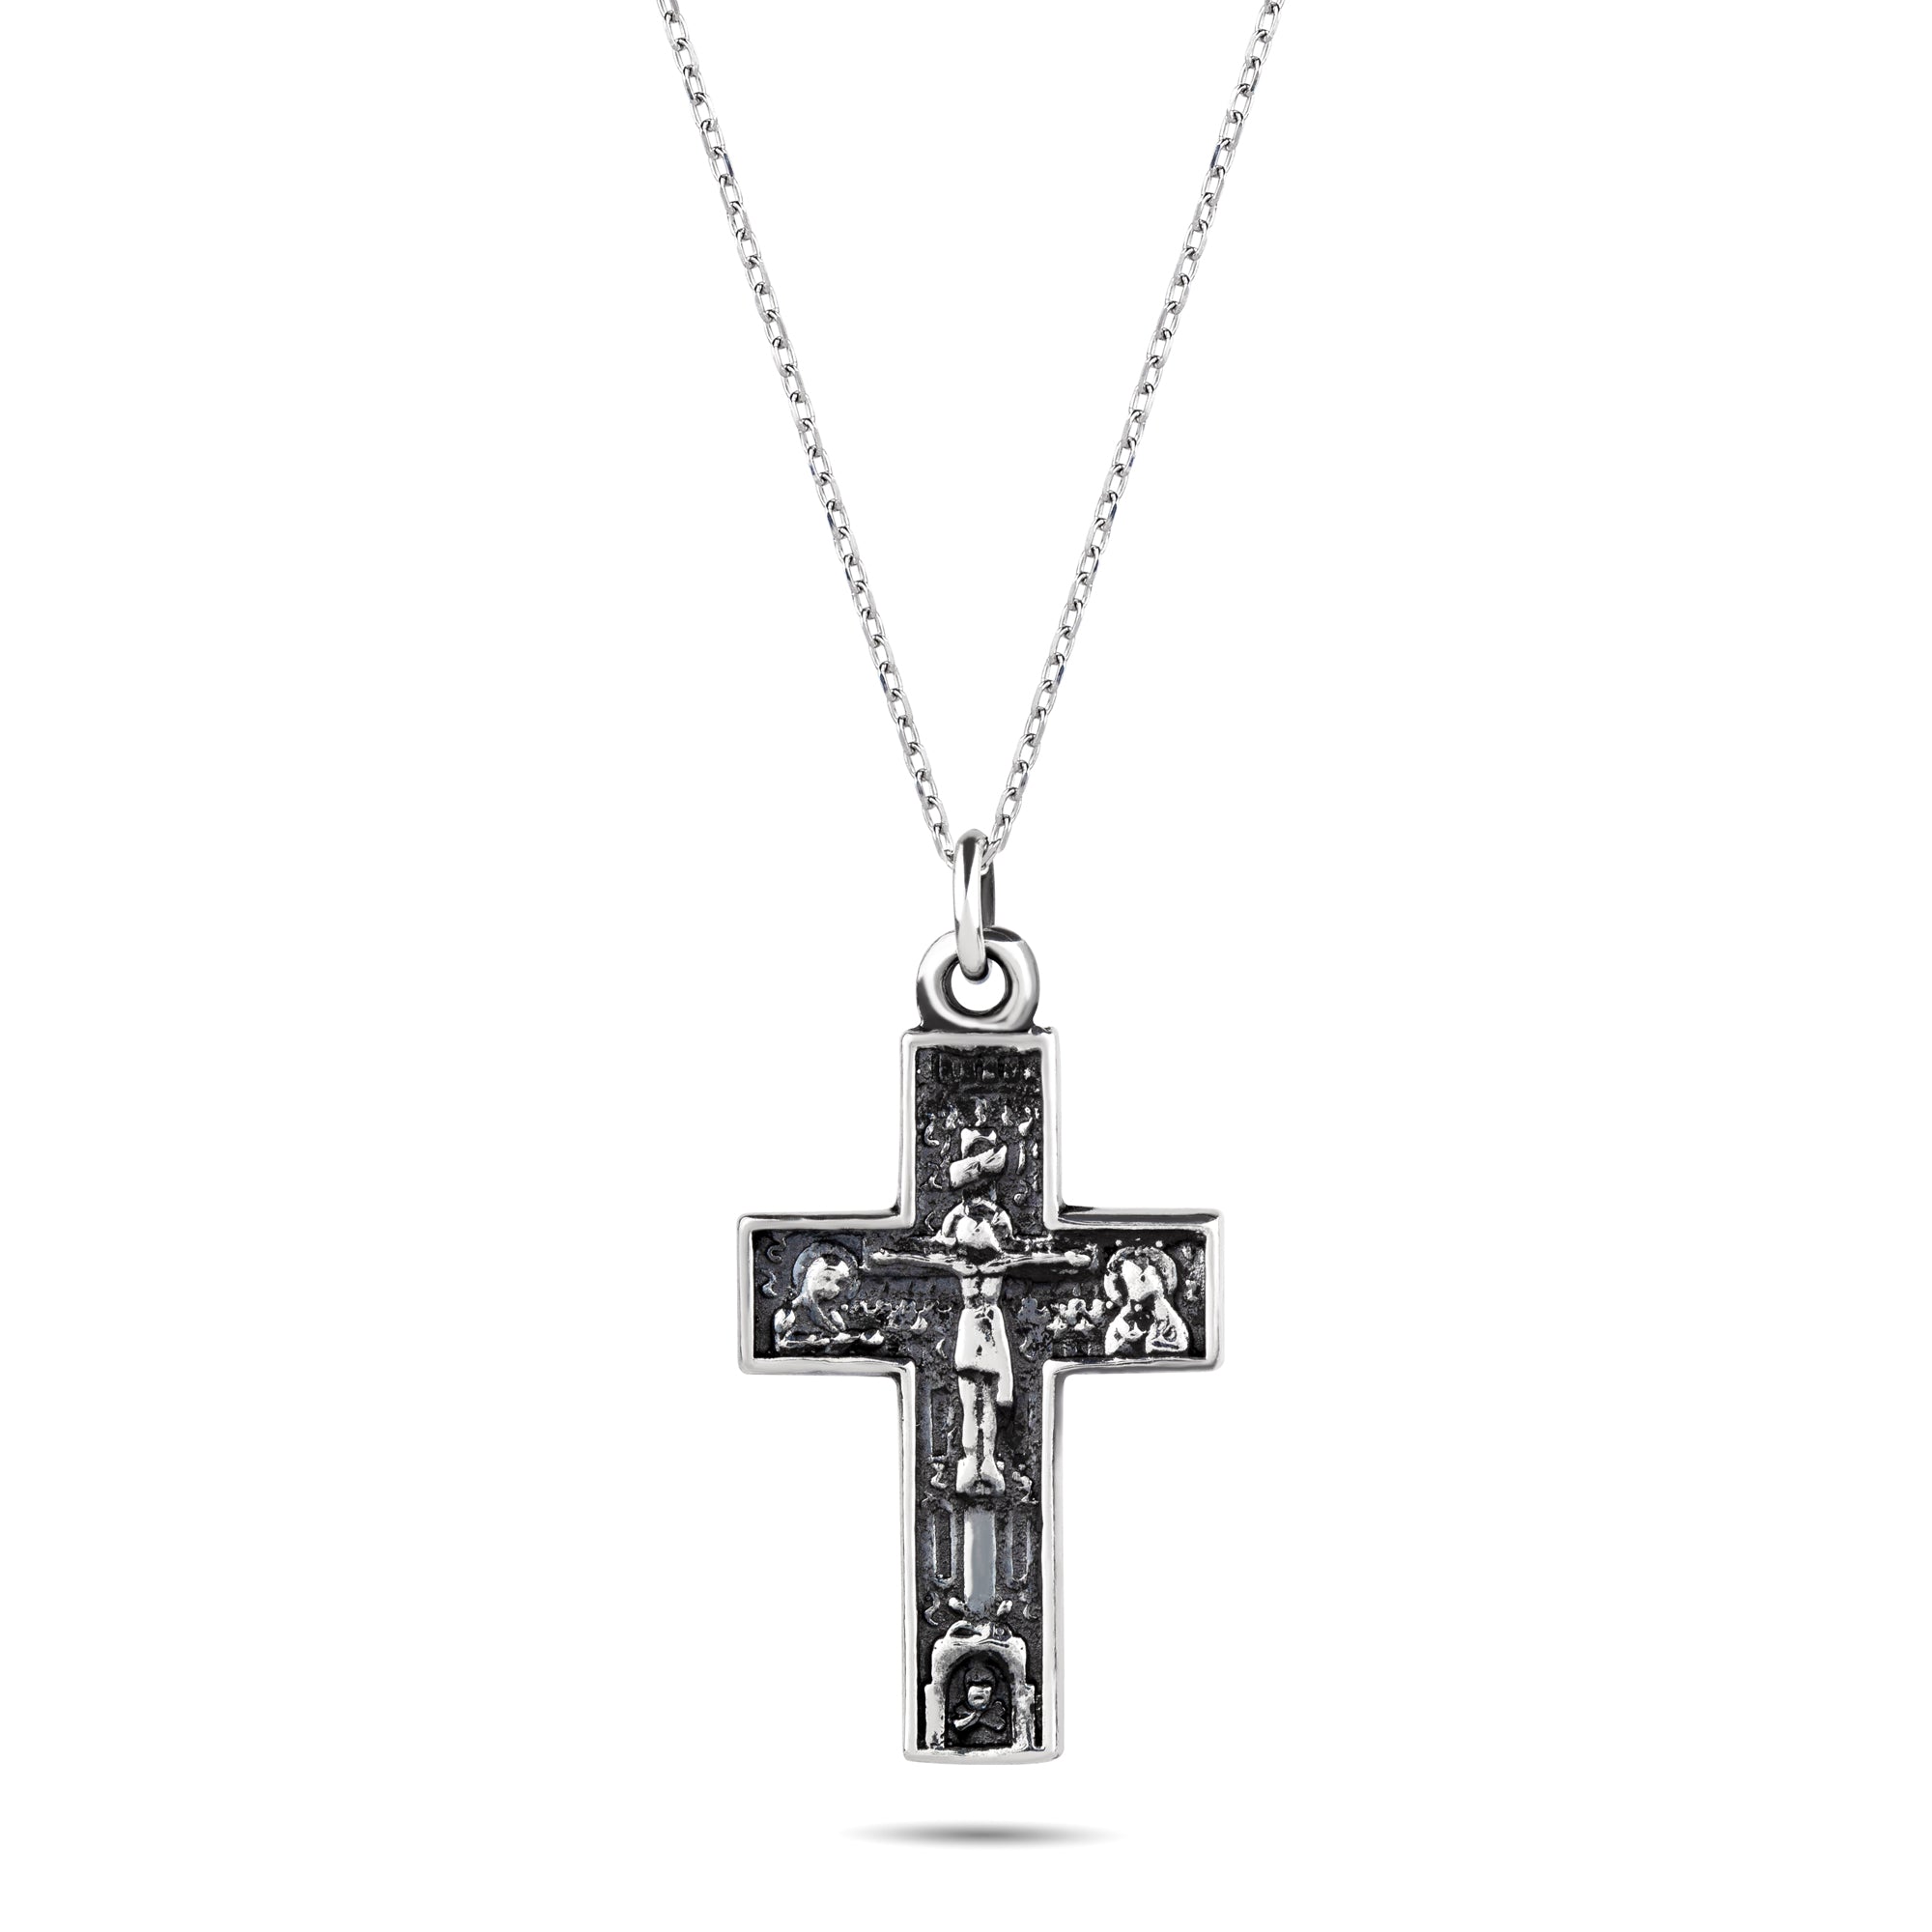 Mount Athos Sterling Silver Cross Pendant